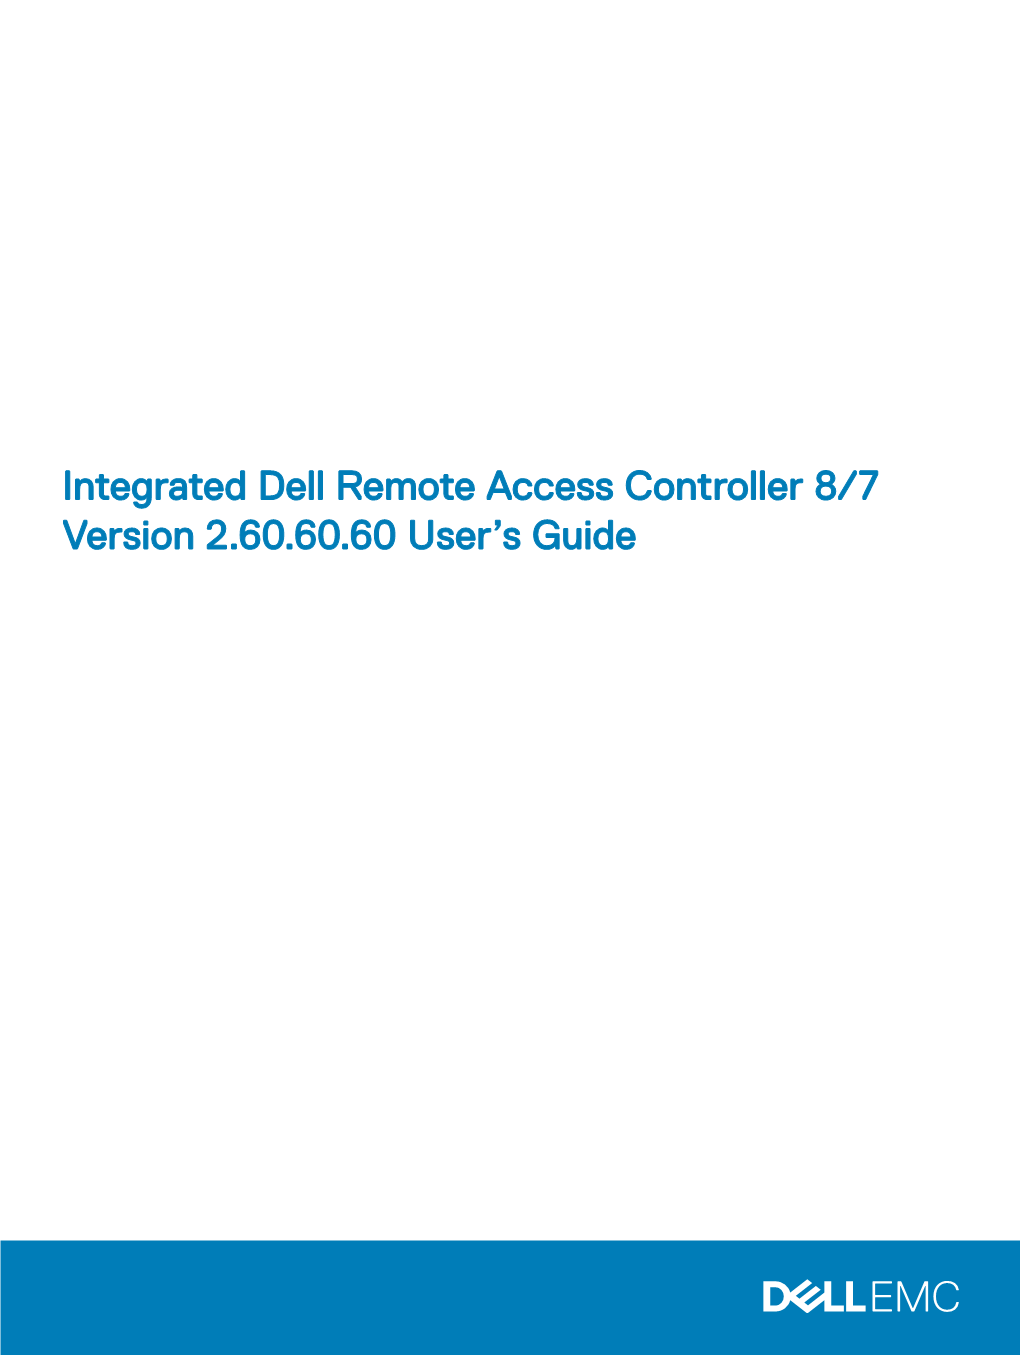 Integrated Dell Remote Access Controller 8/7 Version 2.60.60.60 User's Guide